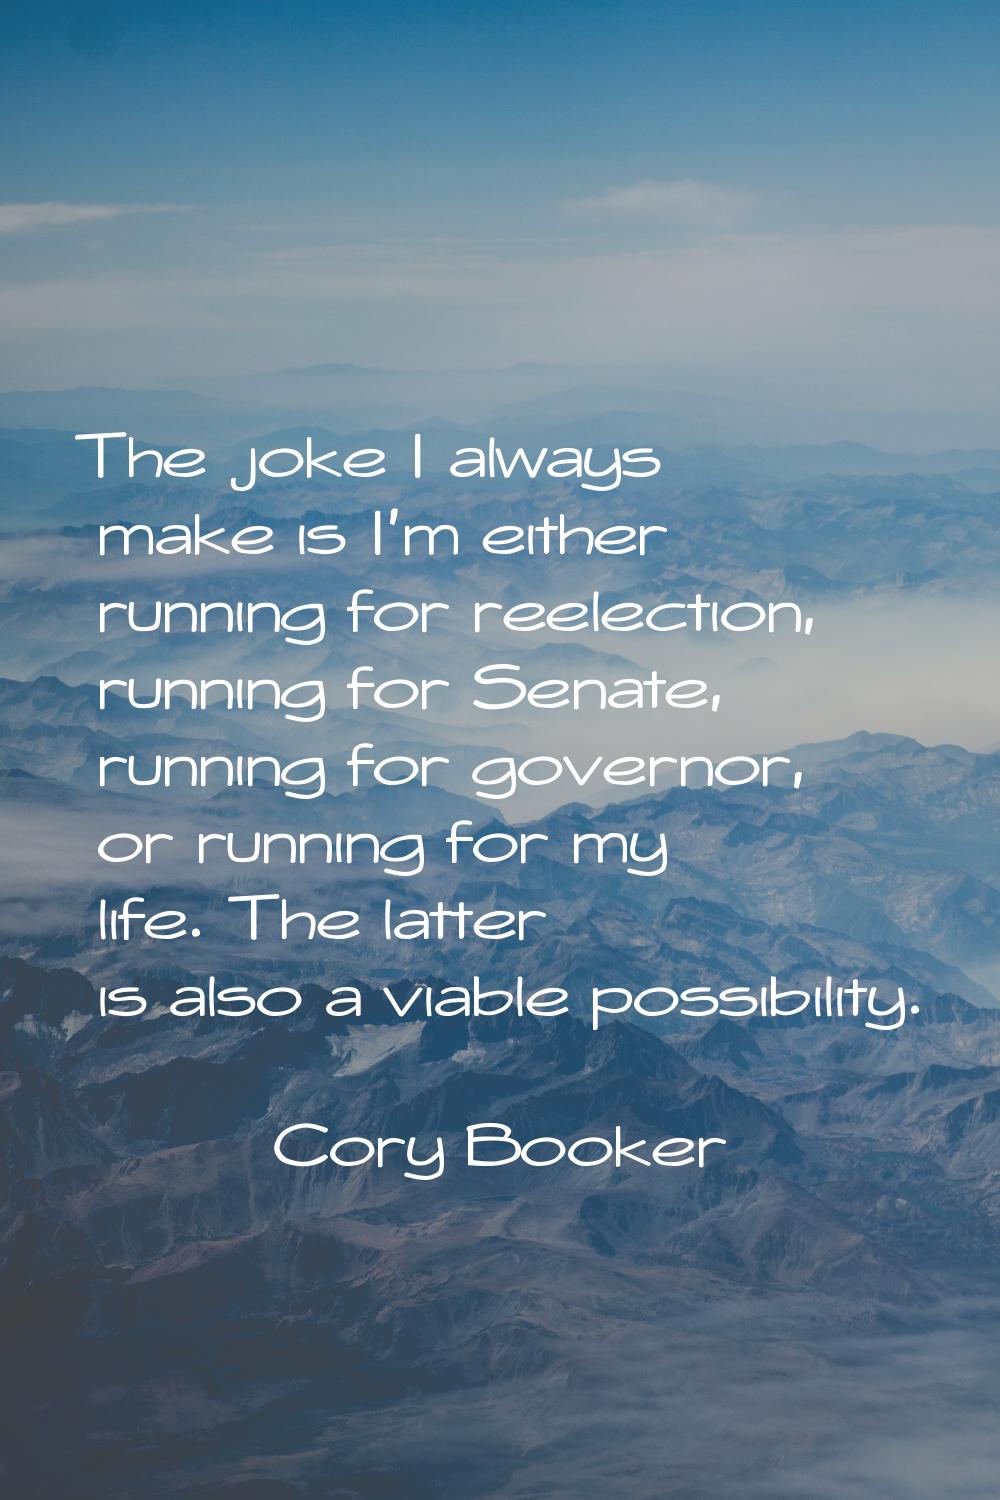 The joke I always make is I'm either running for reelection, running for Senate, running for govern